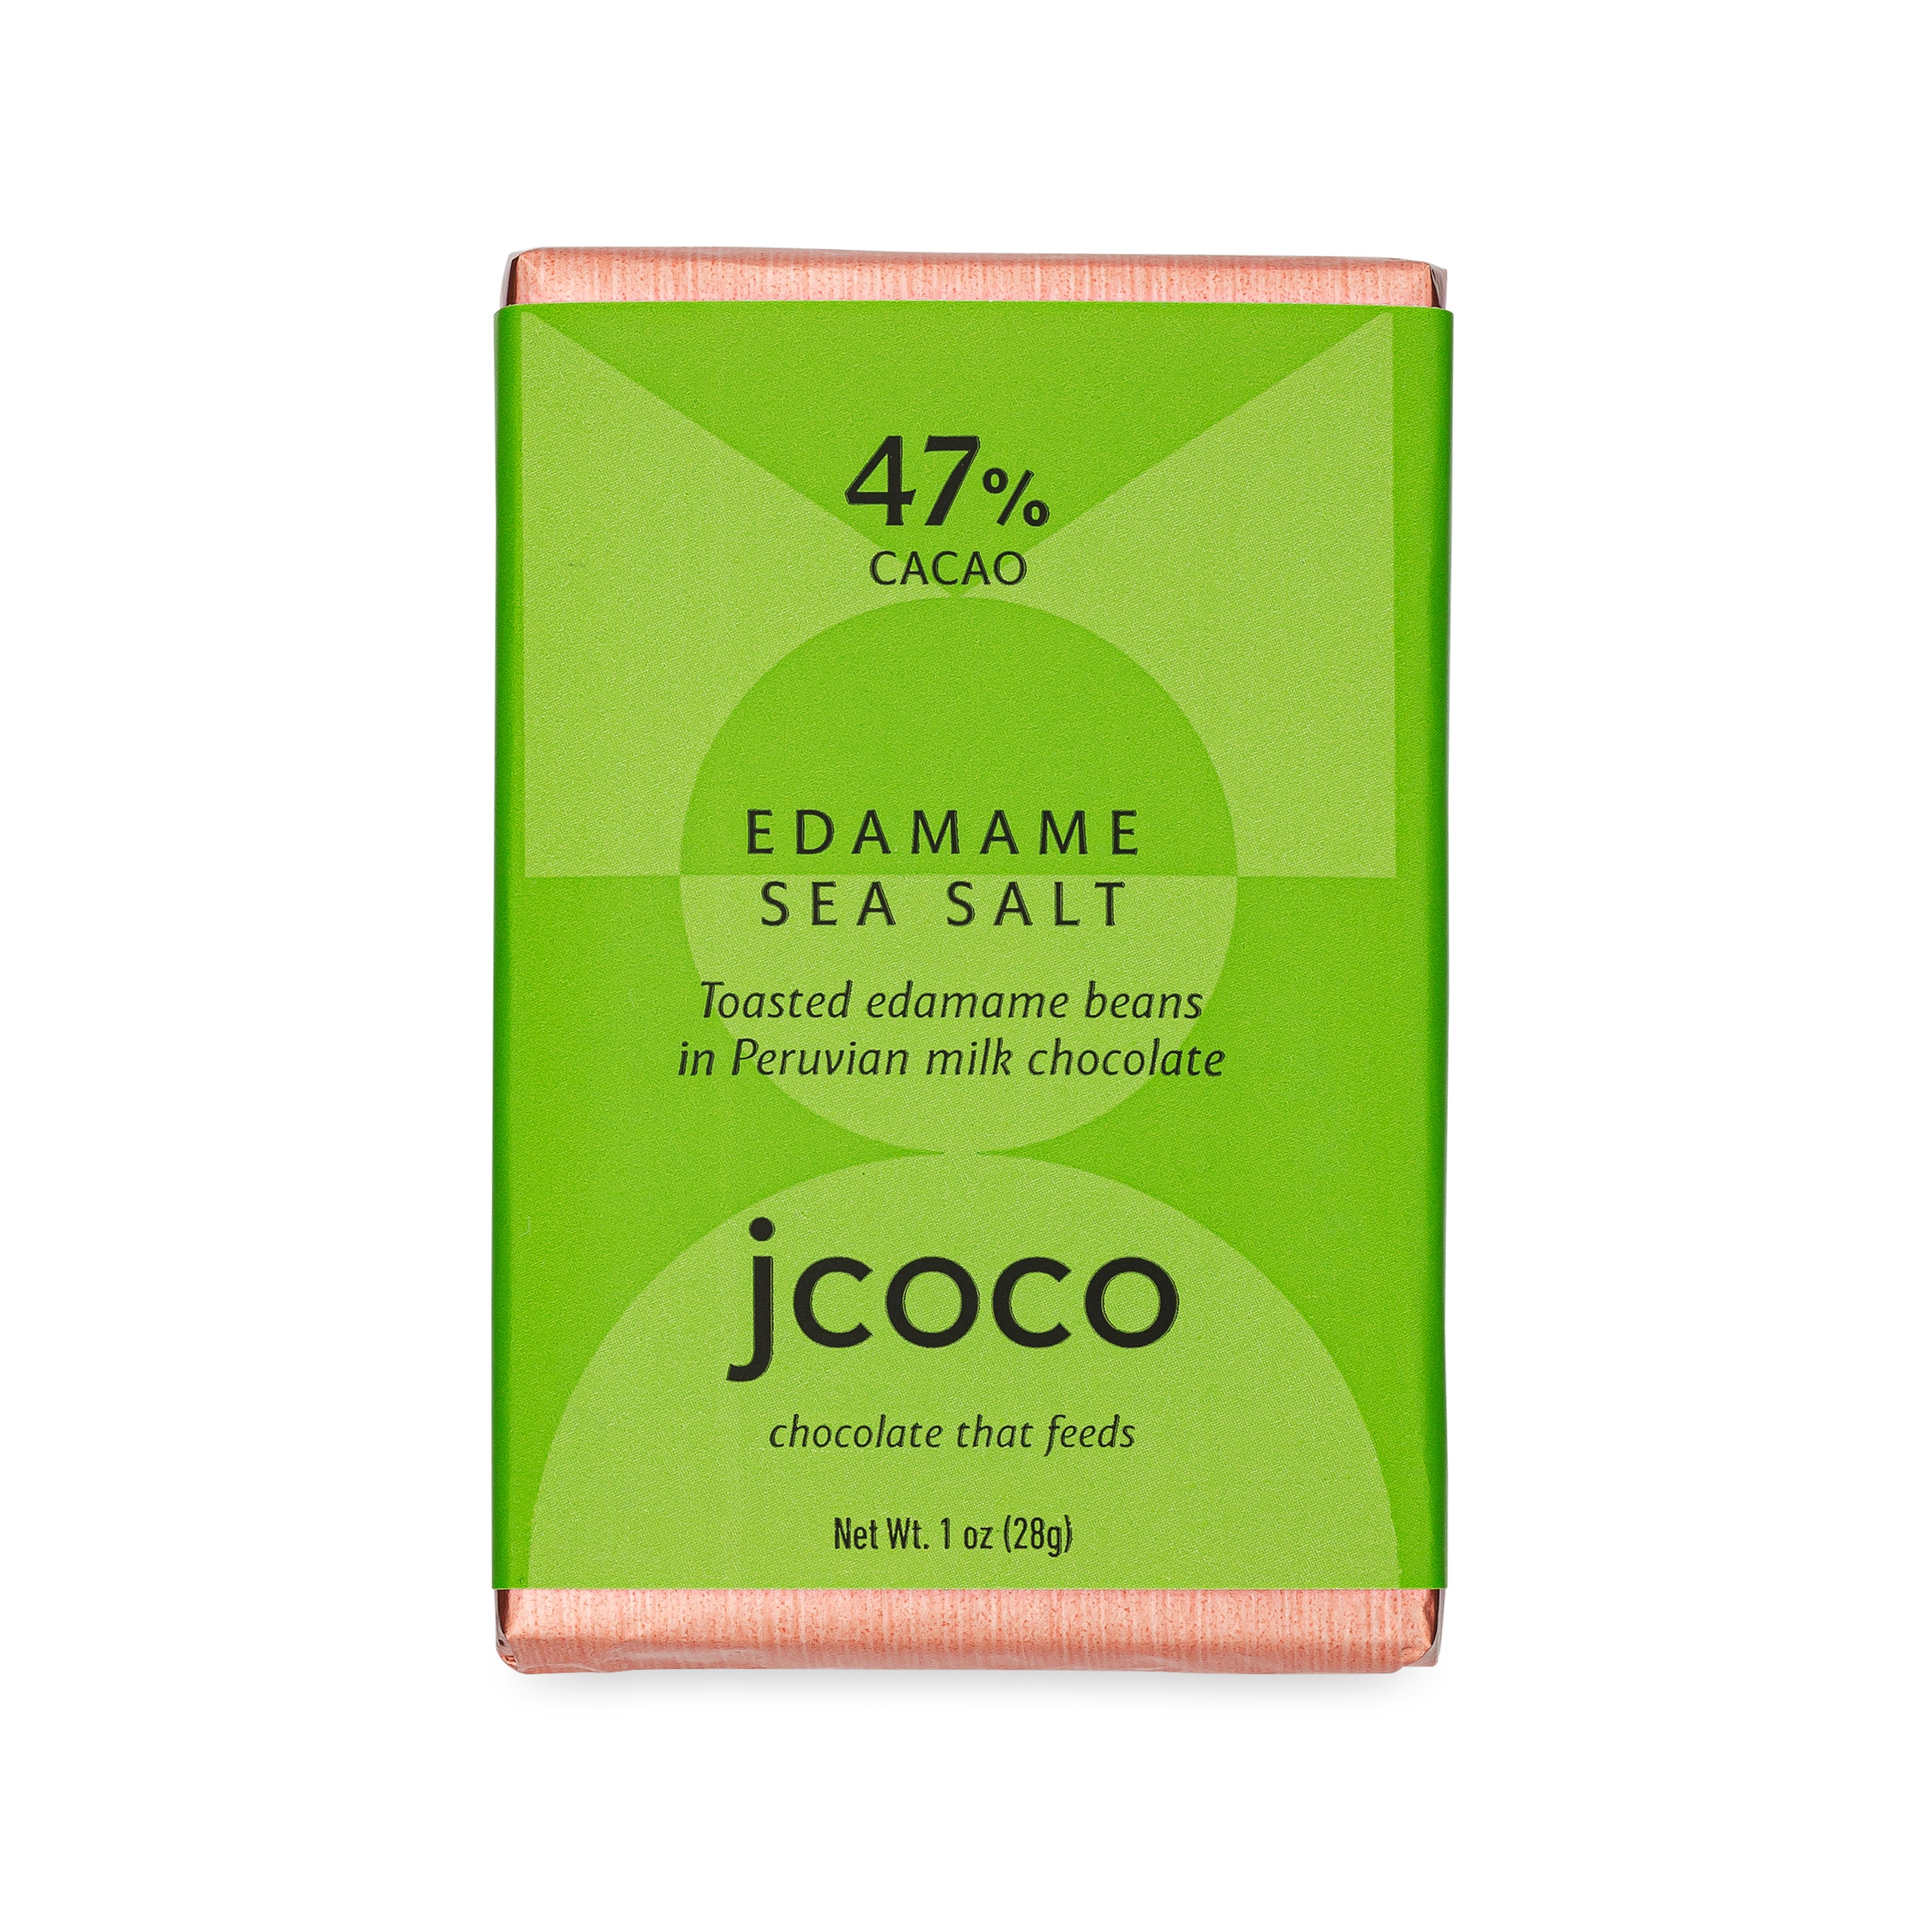 1oz 47% Cacao Edamame Sea Salt chocolate bar